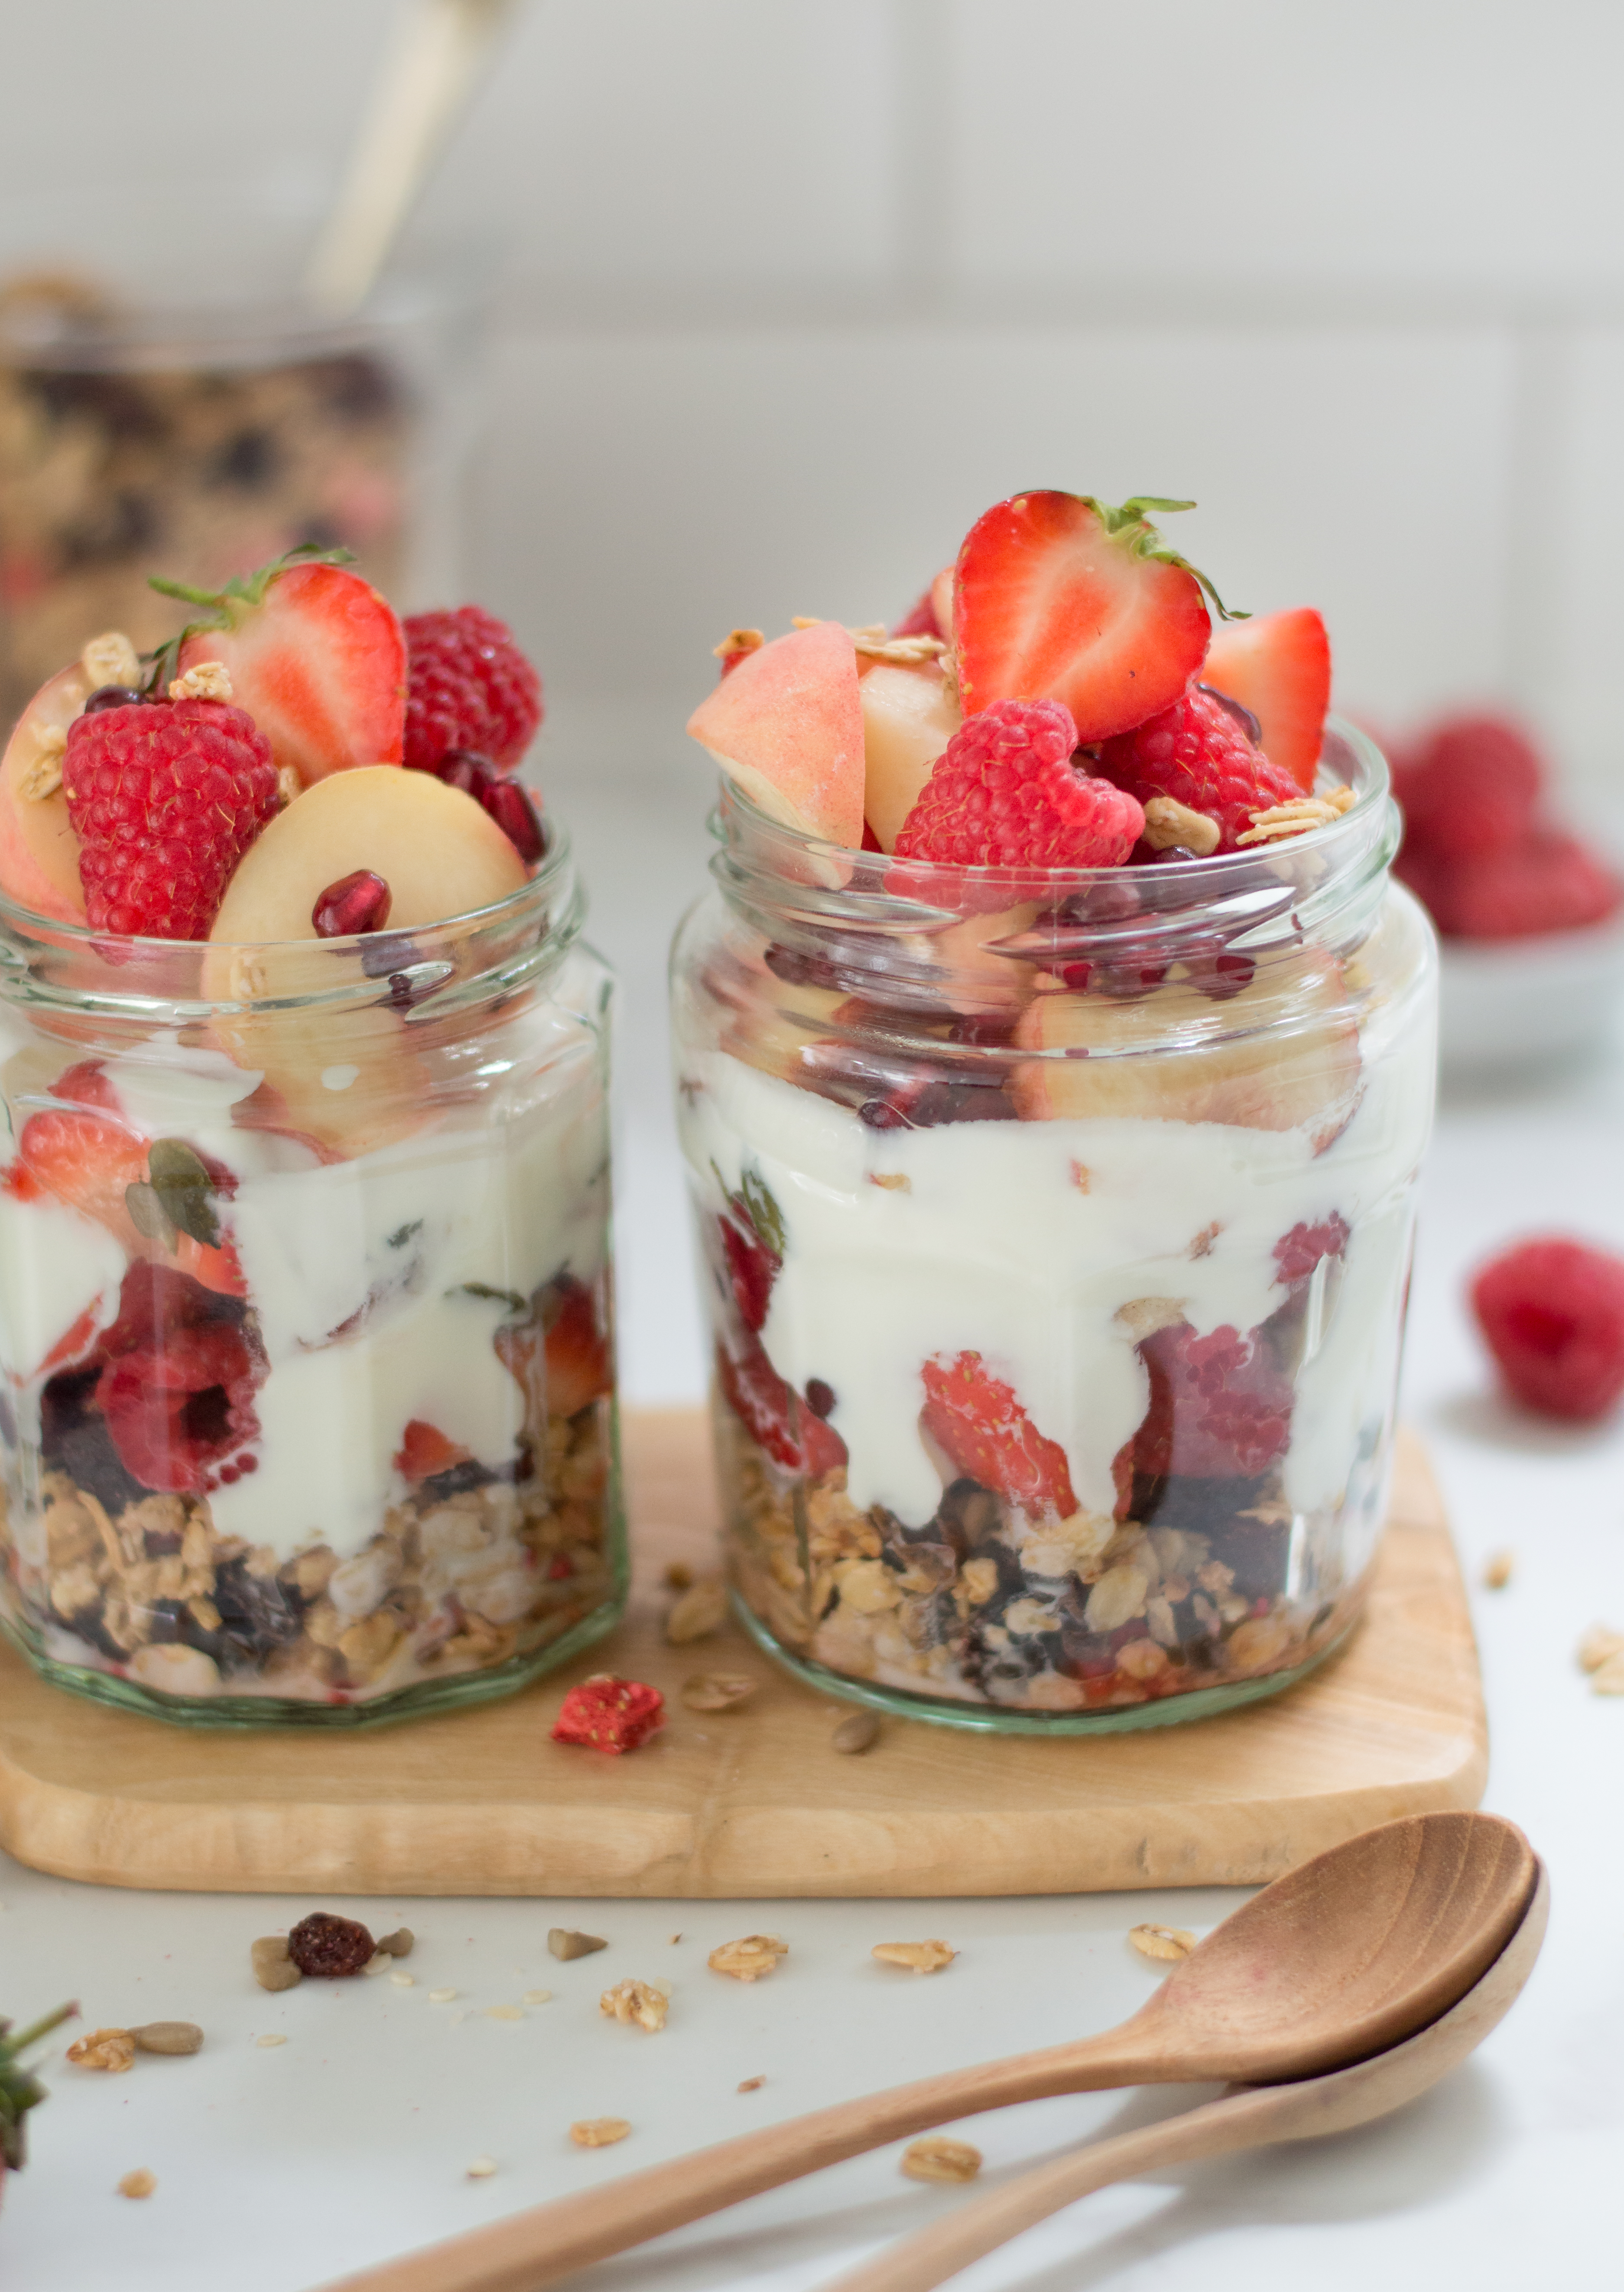 Summer berry crunch #healthybreakfast #breakfastonthego #healthyrecipes